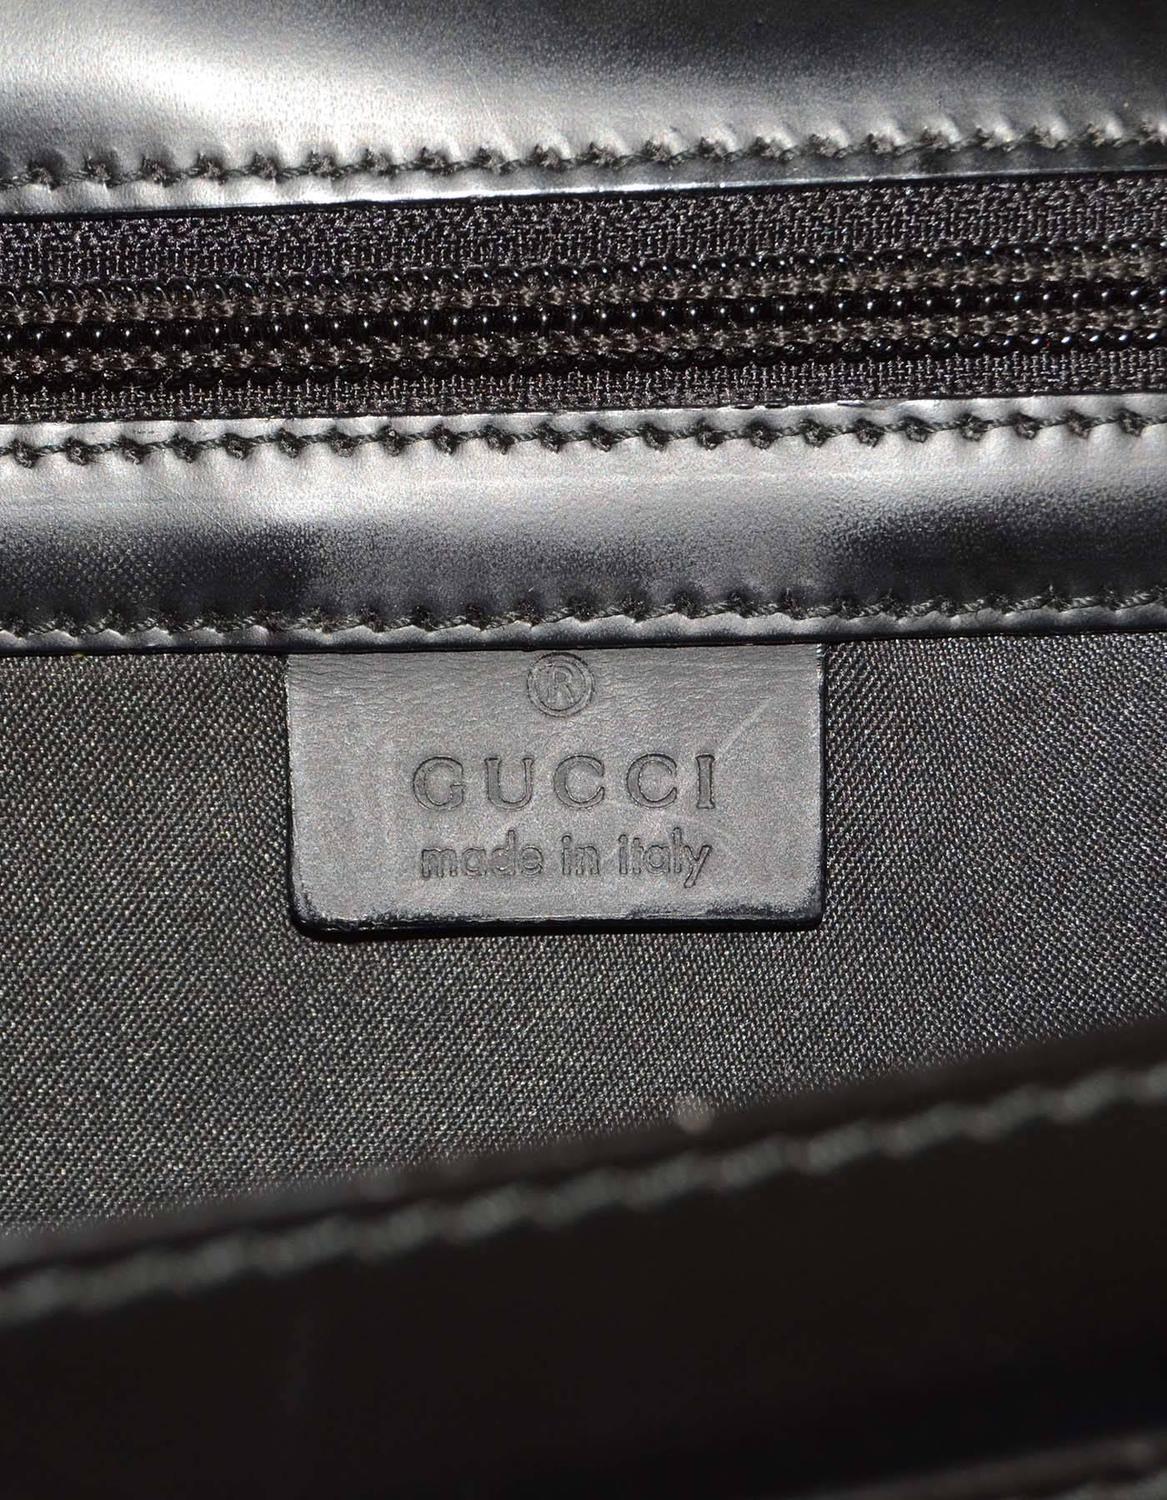 Gucci Black Monogram Canvas Attache Briefcase For Sale at 1stdibs